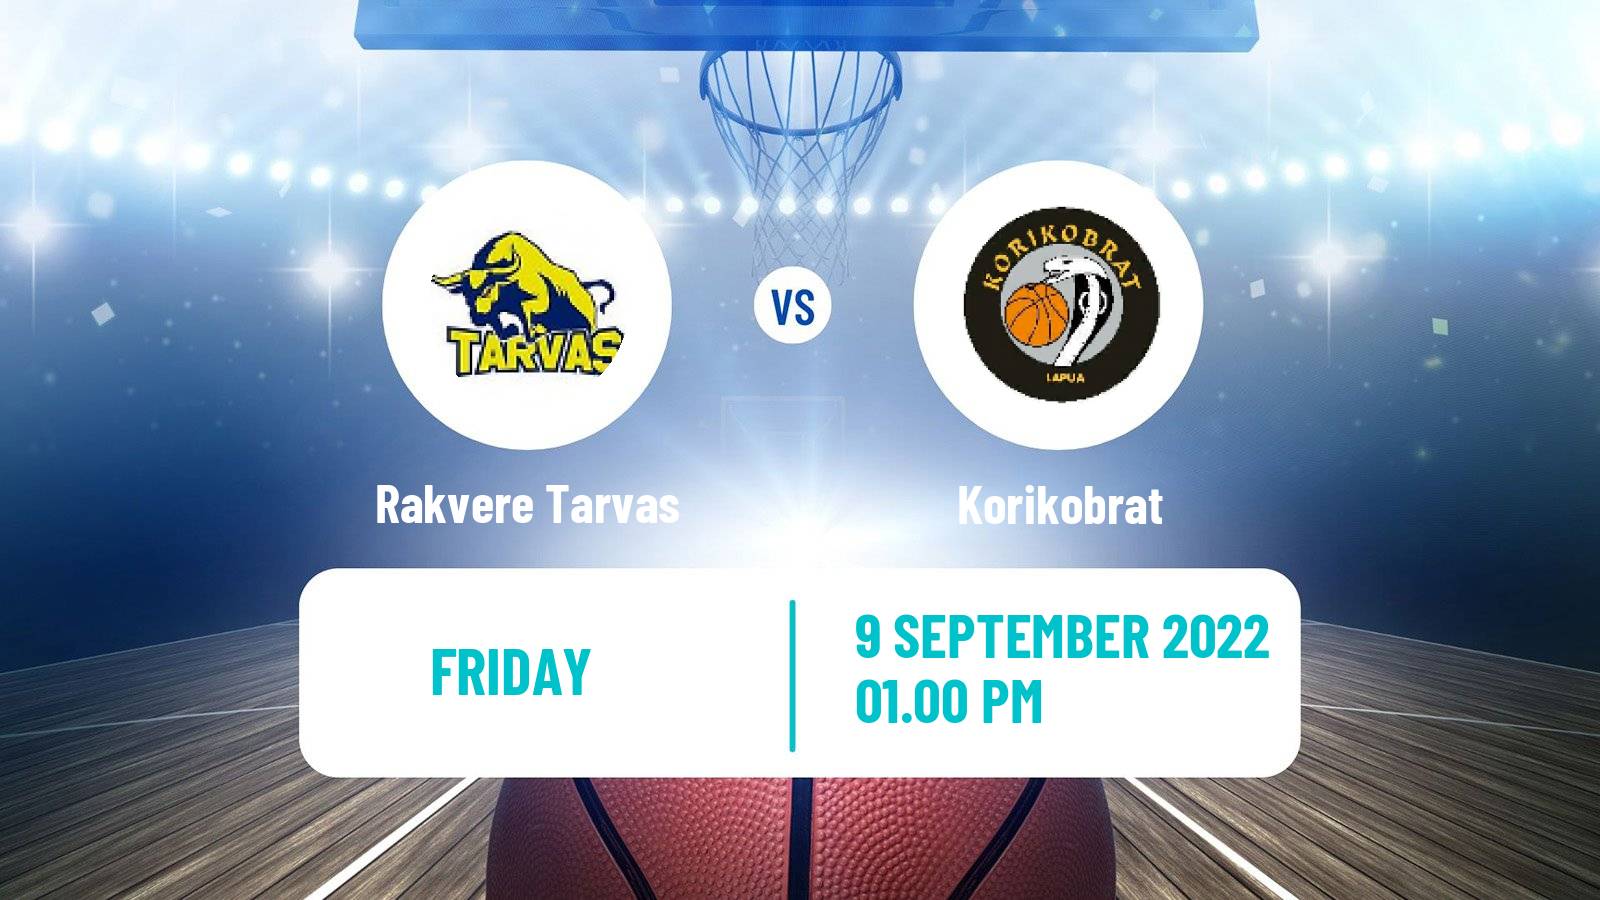 Basketball Club Friendly Basketball Rakvere Tarvas - Korikobrat